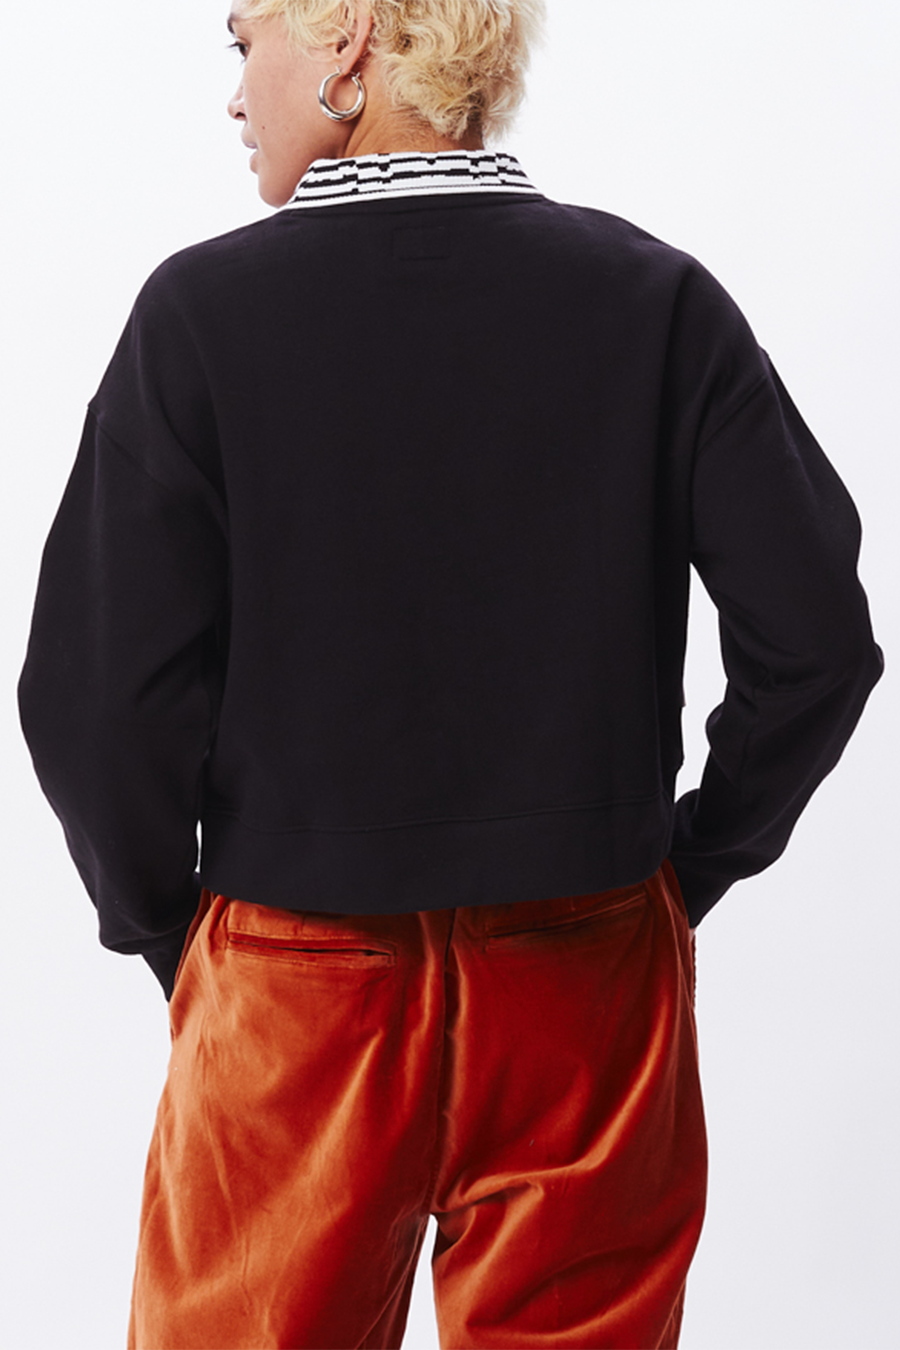 Woodberry Collard Sweatshirt | Black Multi - Main Image Number 2 of 2